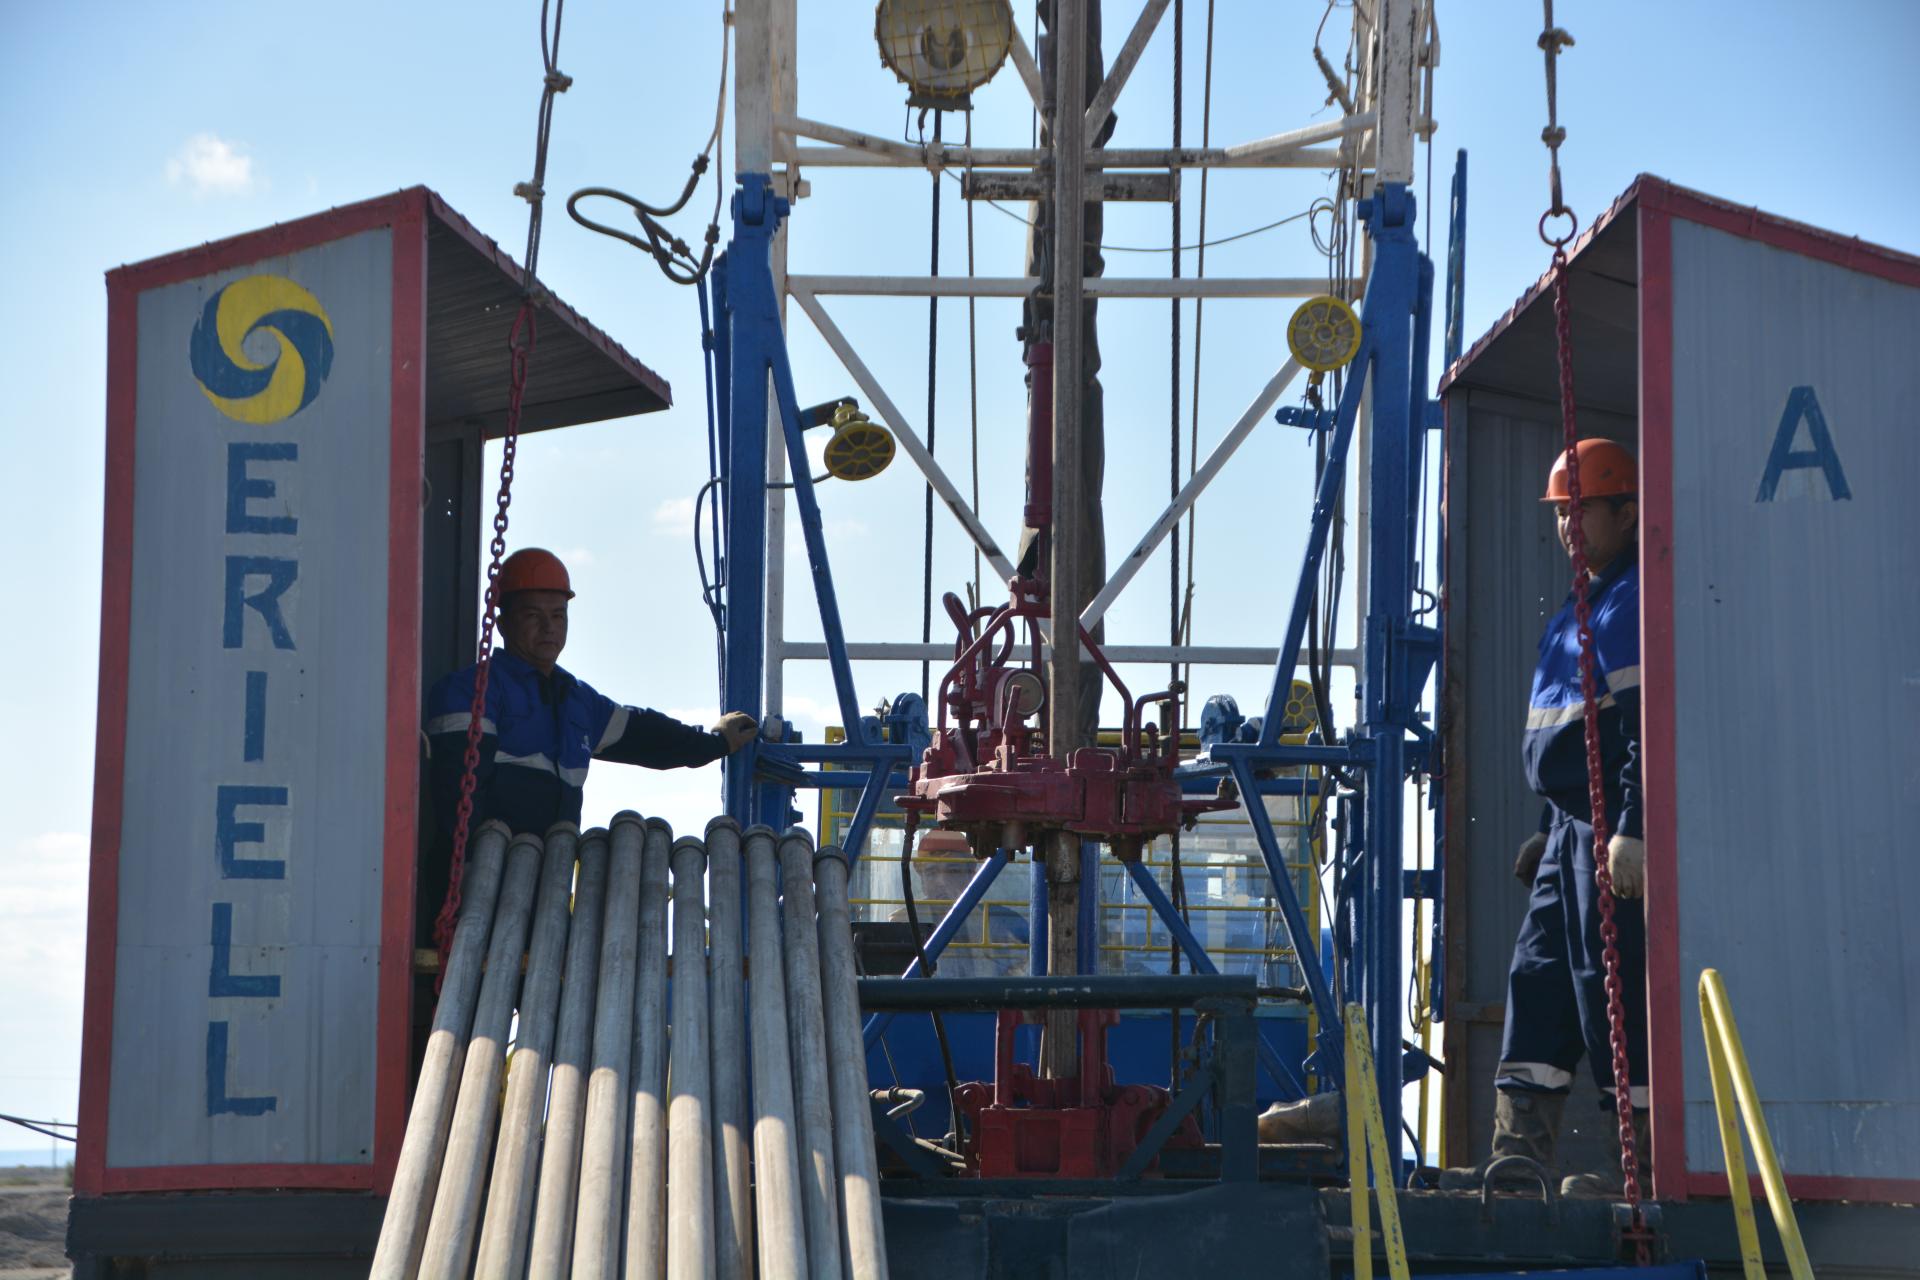 Fuel energy complex of Uzbek Karakalpakastan actively developing Surgil deposit (PHOTO)